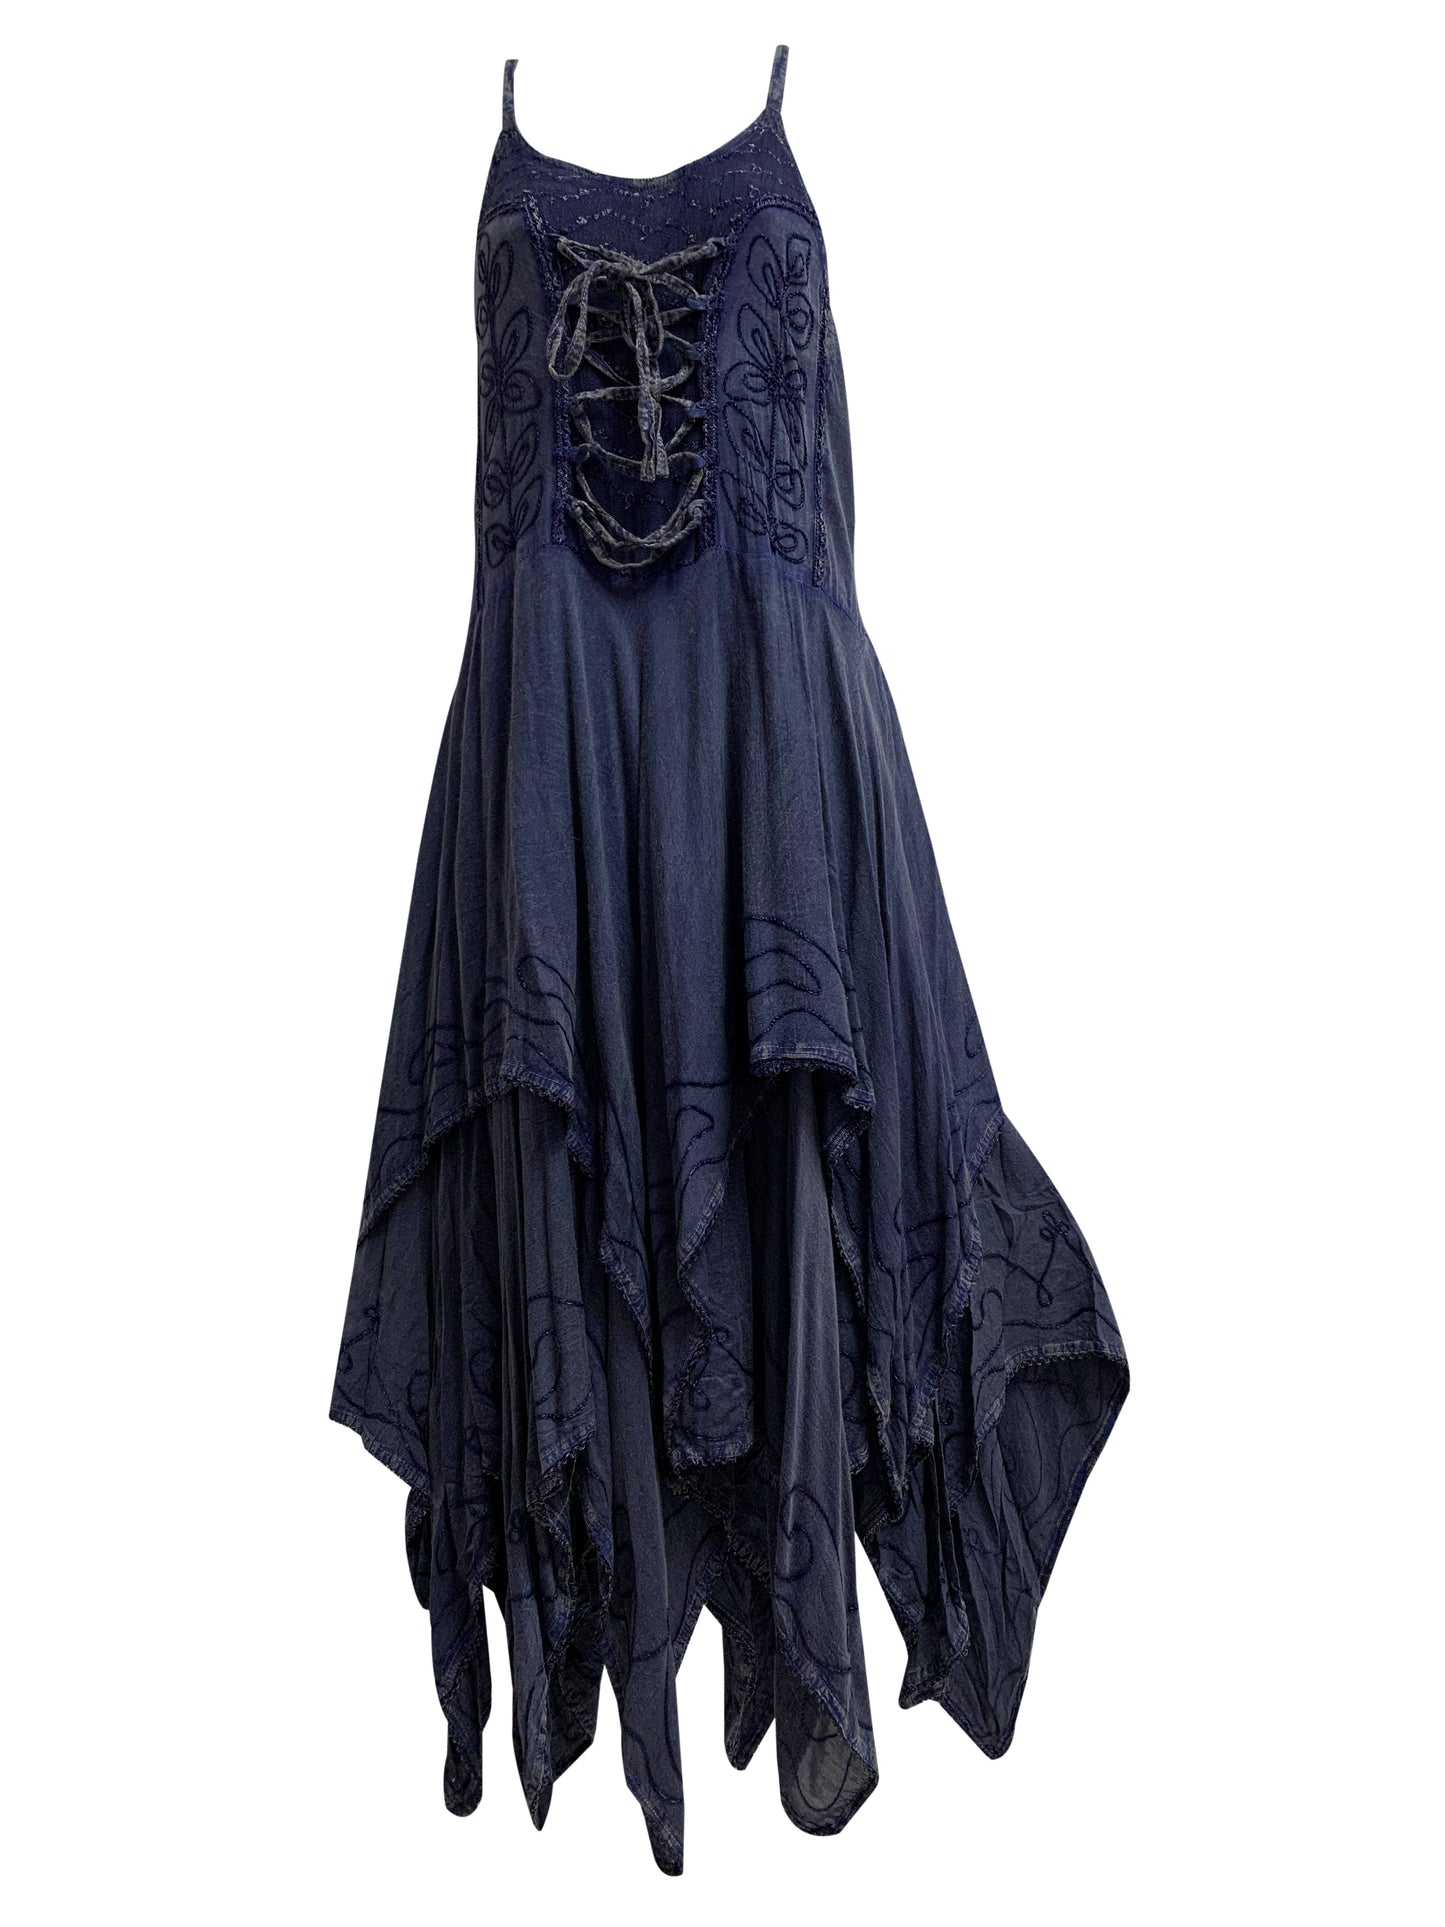 Missy Bohemian Renaissance Spaghetti Strap Layered Embroidered Long Dress